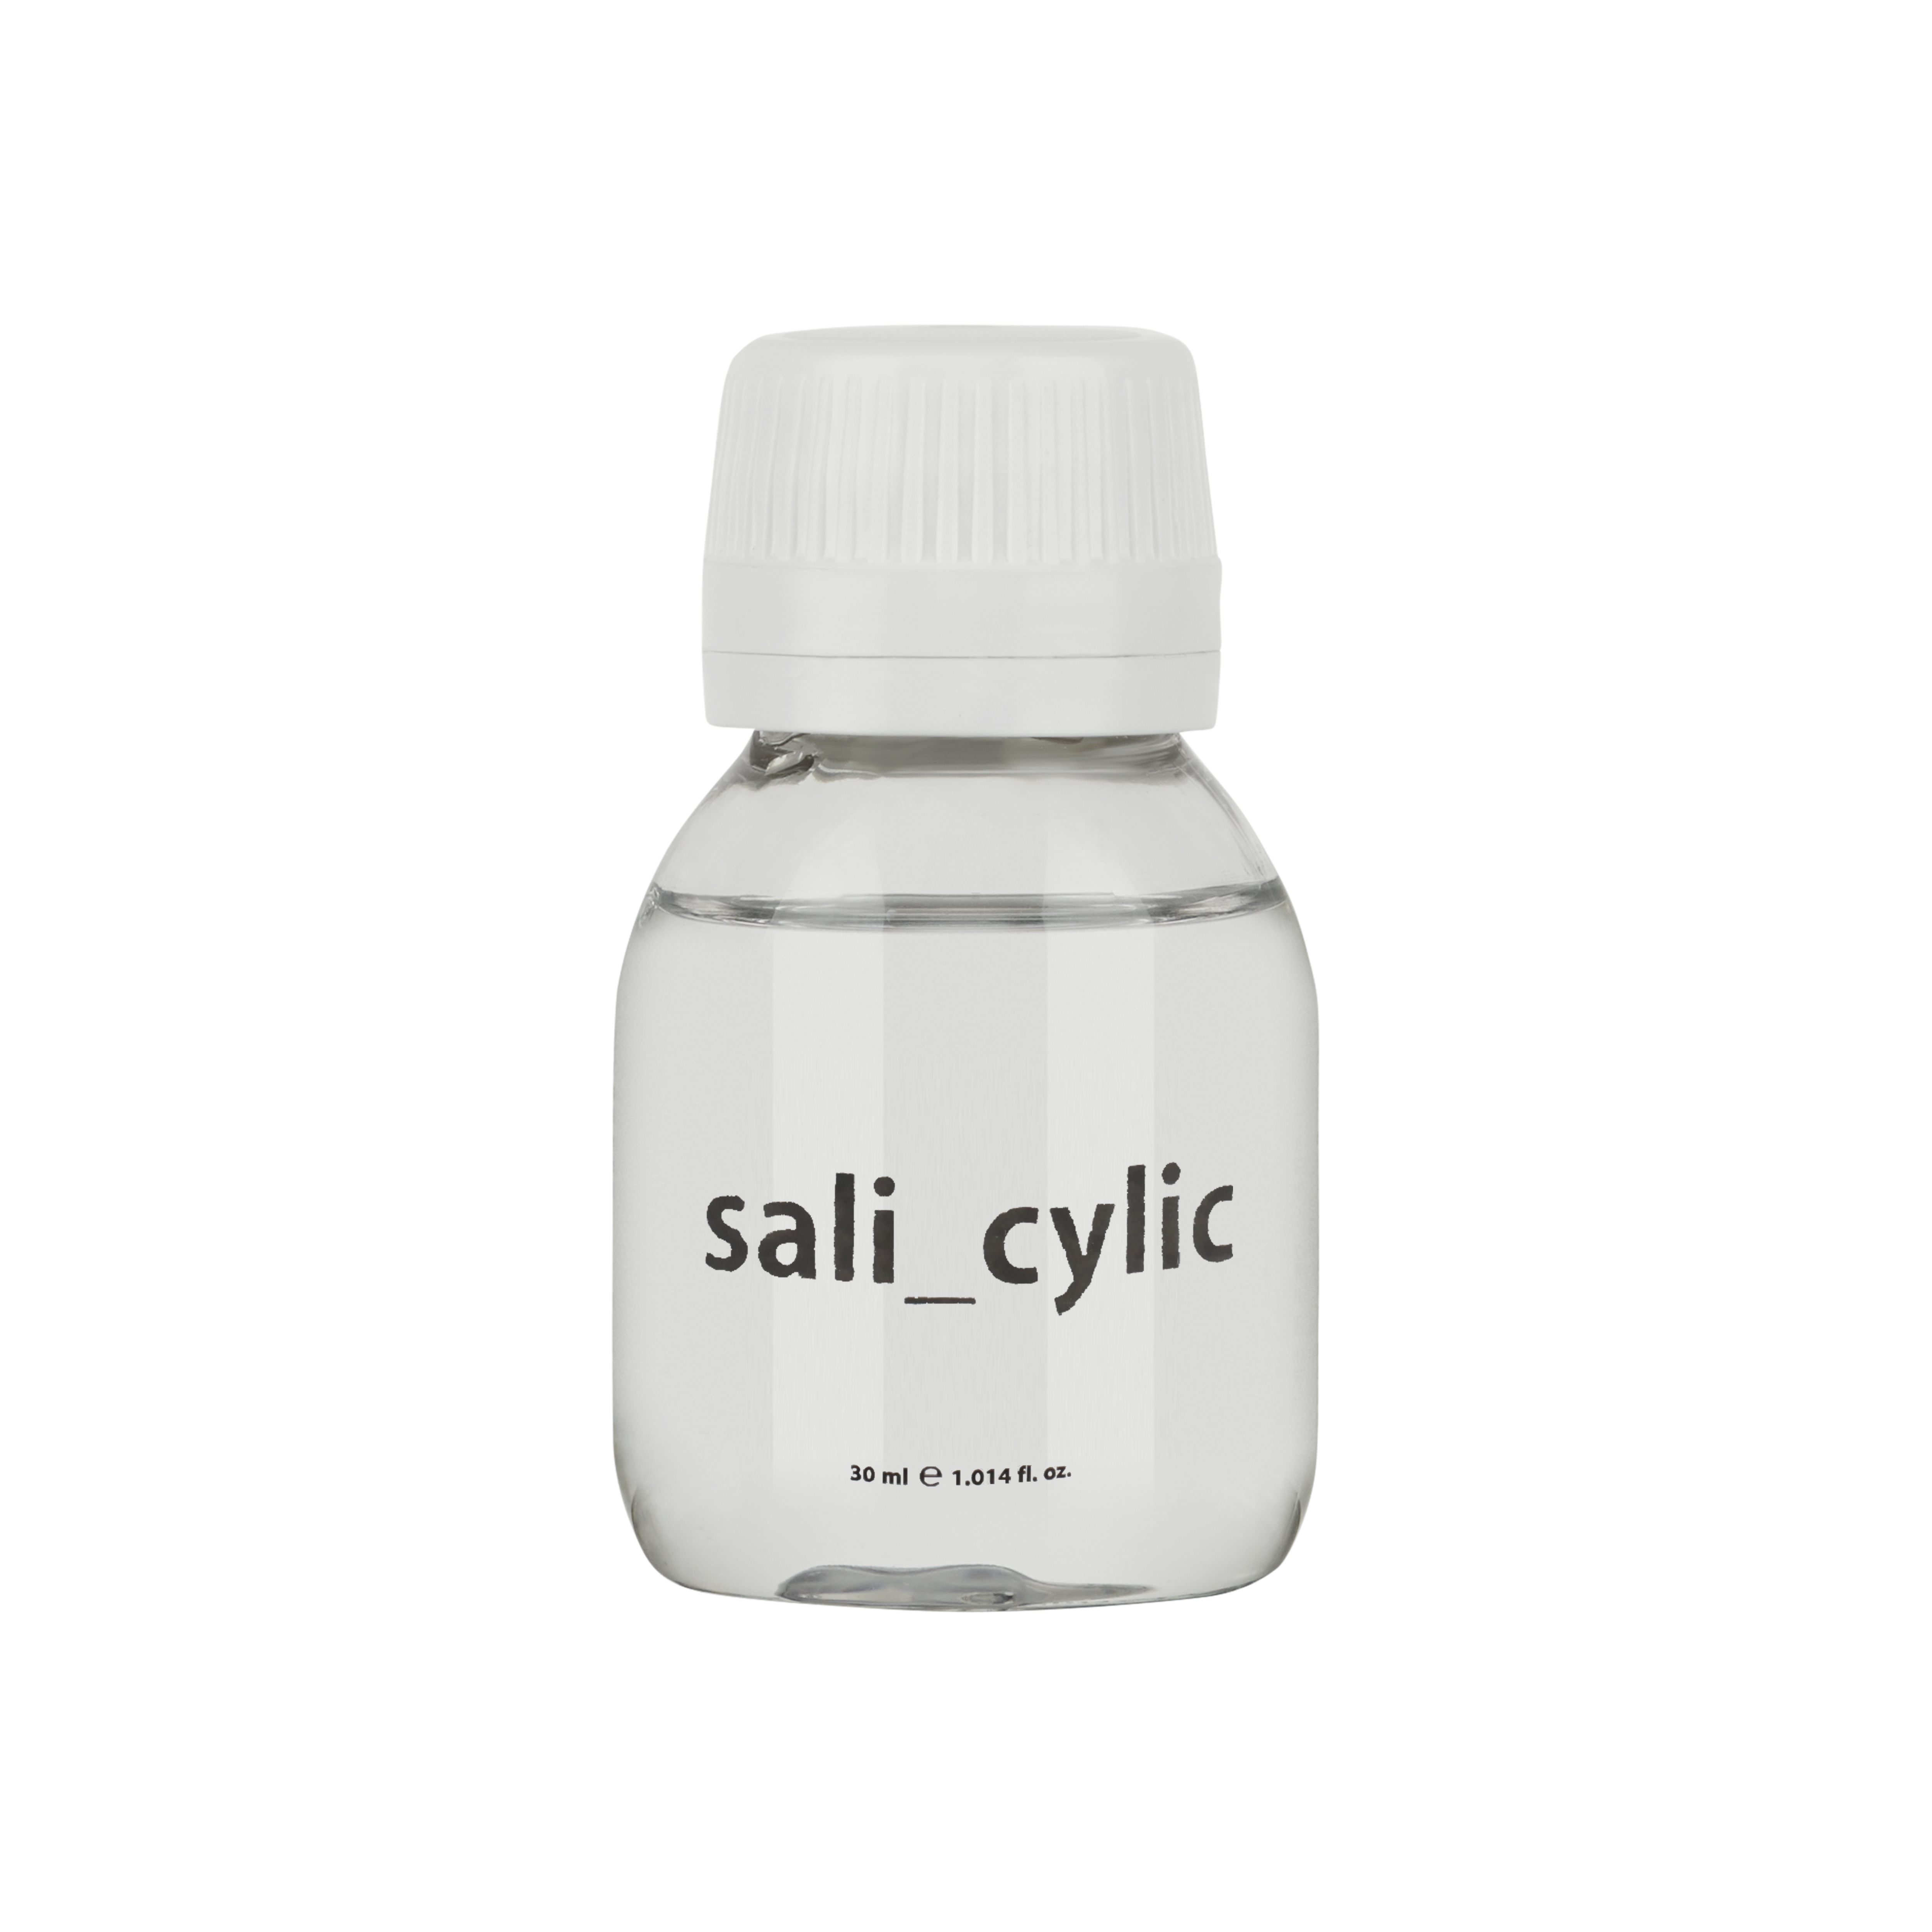 Sali_cylic 10%  30 ml